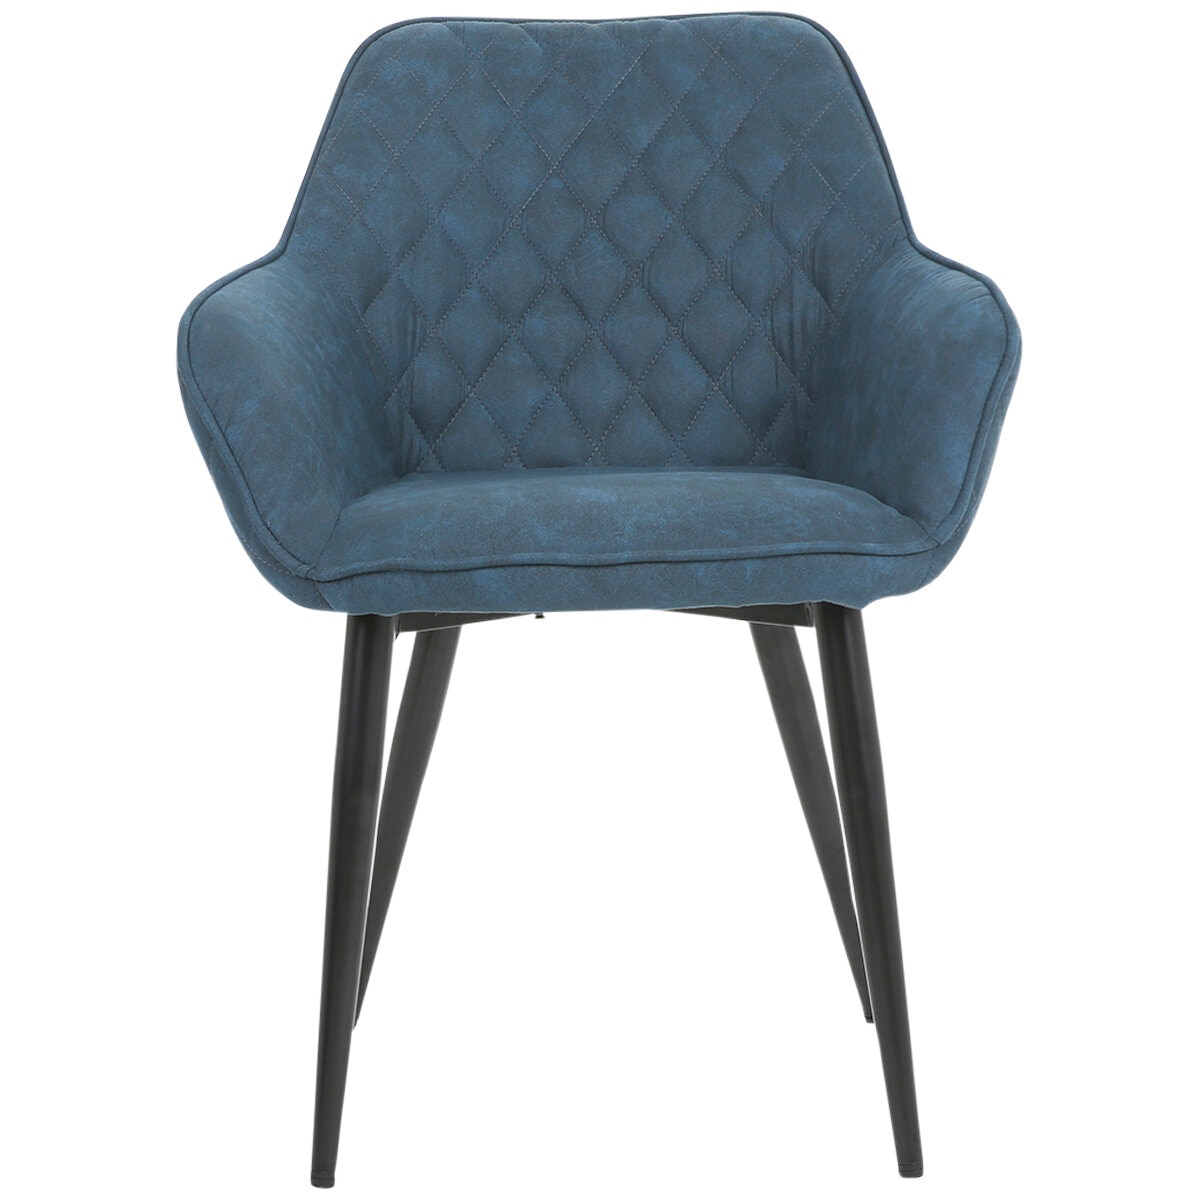 142279-Onex RiVa Dining Chair Dark Blue